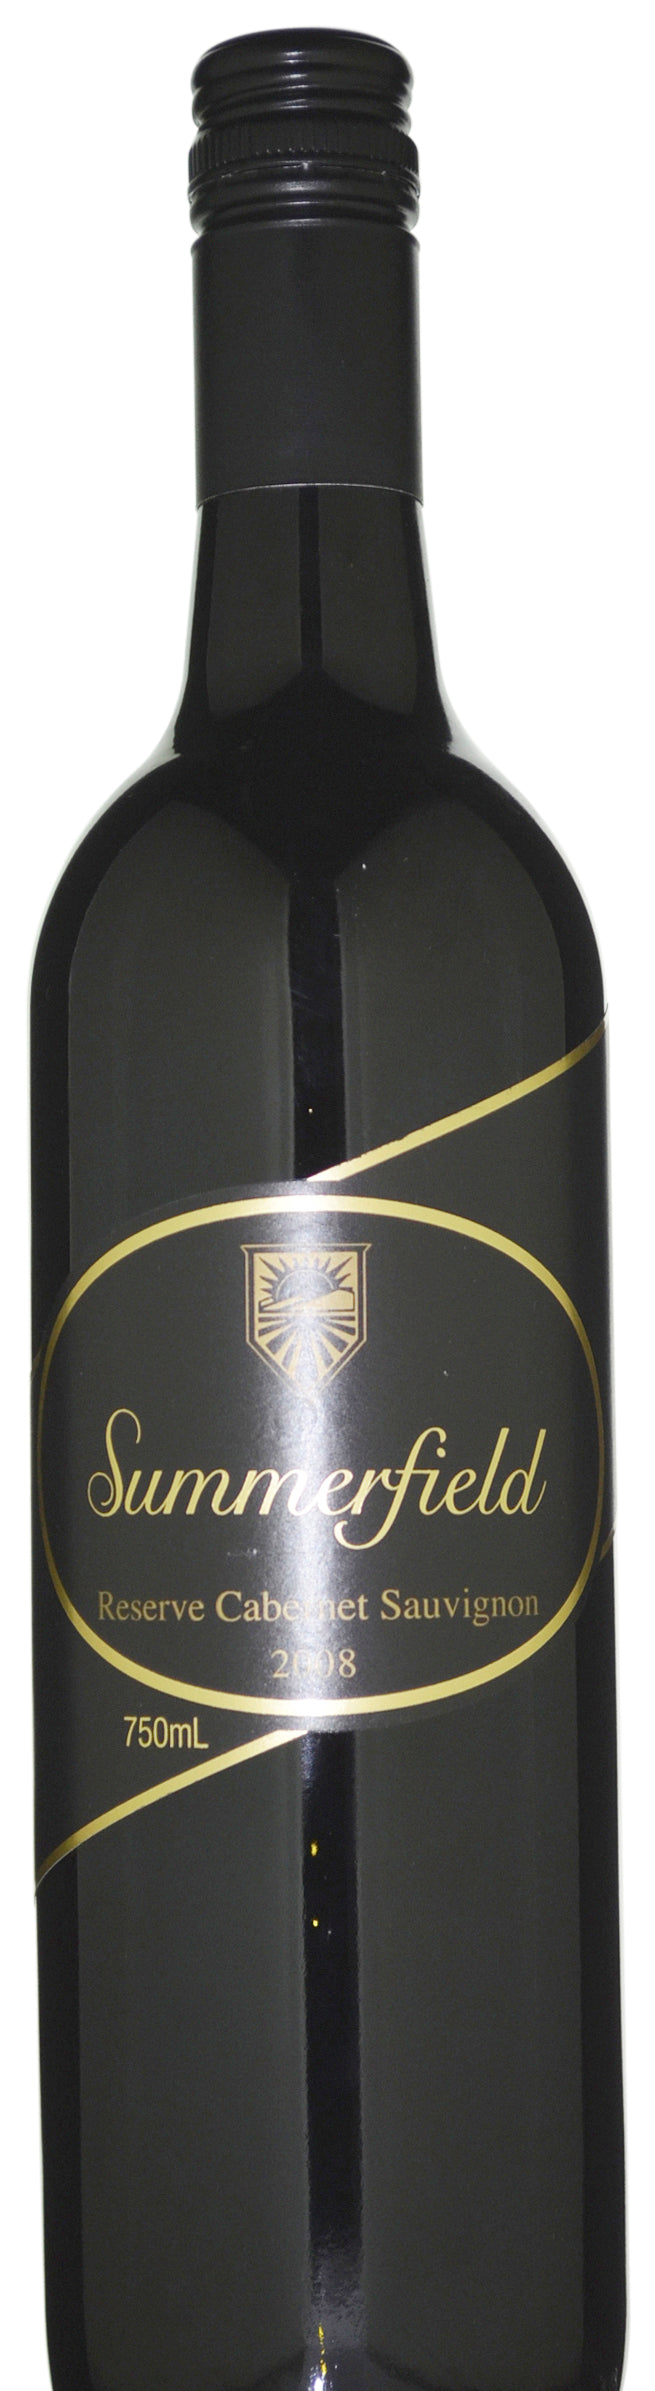 Summerfield Wines Reserve Cabernet Sauvignon 2008